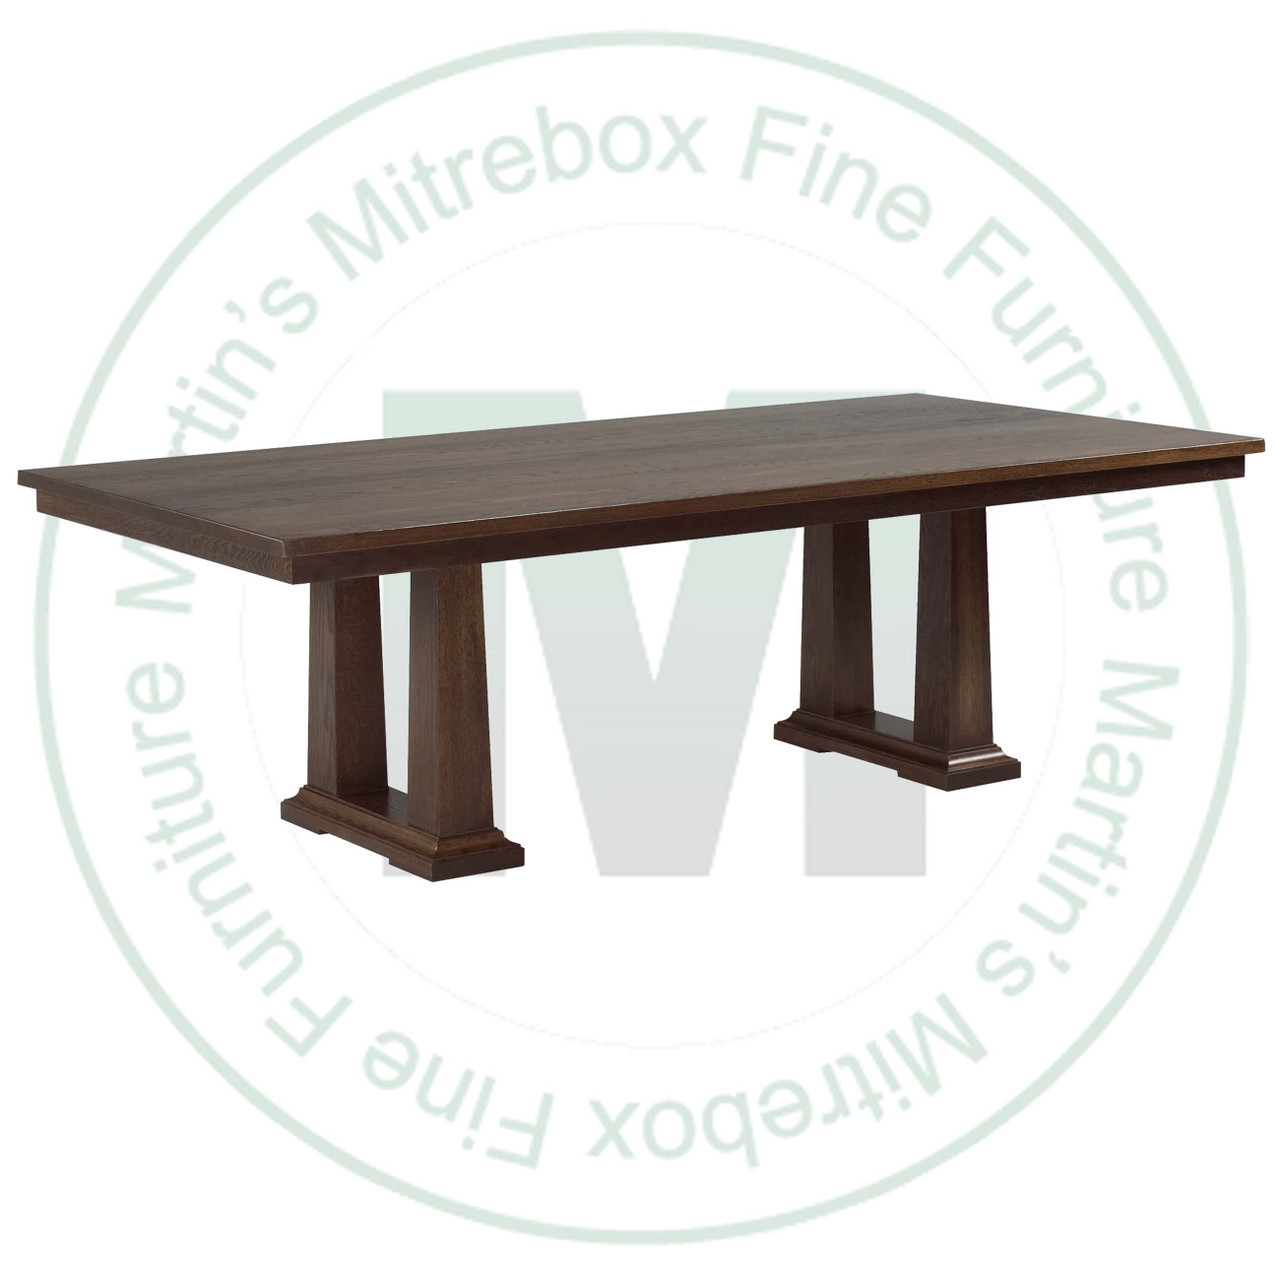 Oak Acropolis Solid Top Double Pedestal Table 48''D x 72''W x 30''H Table Has 1.75'' Thick Top